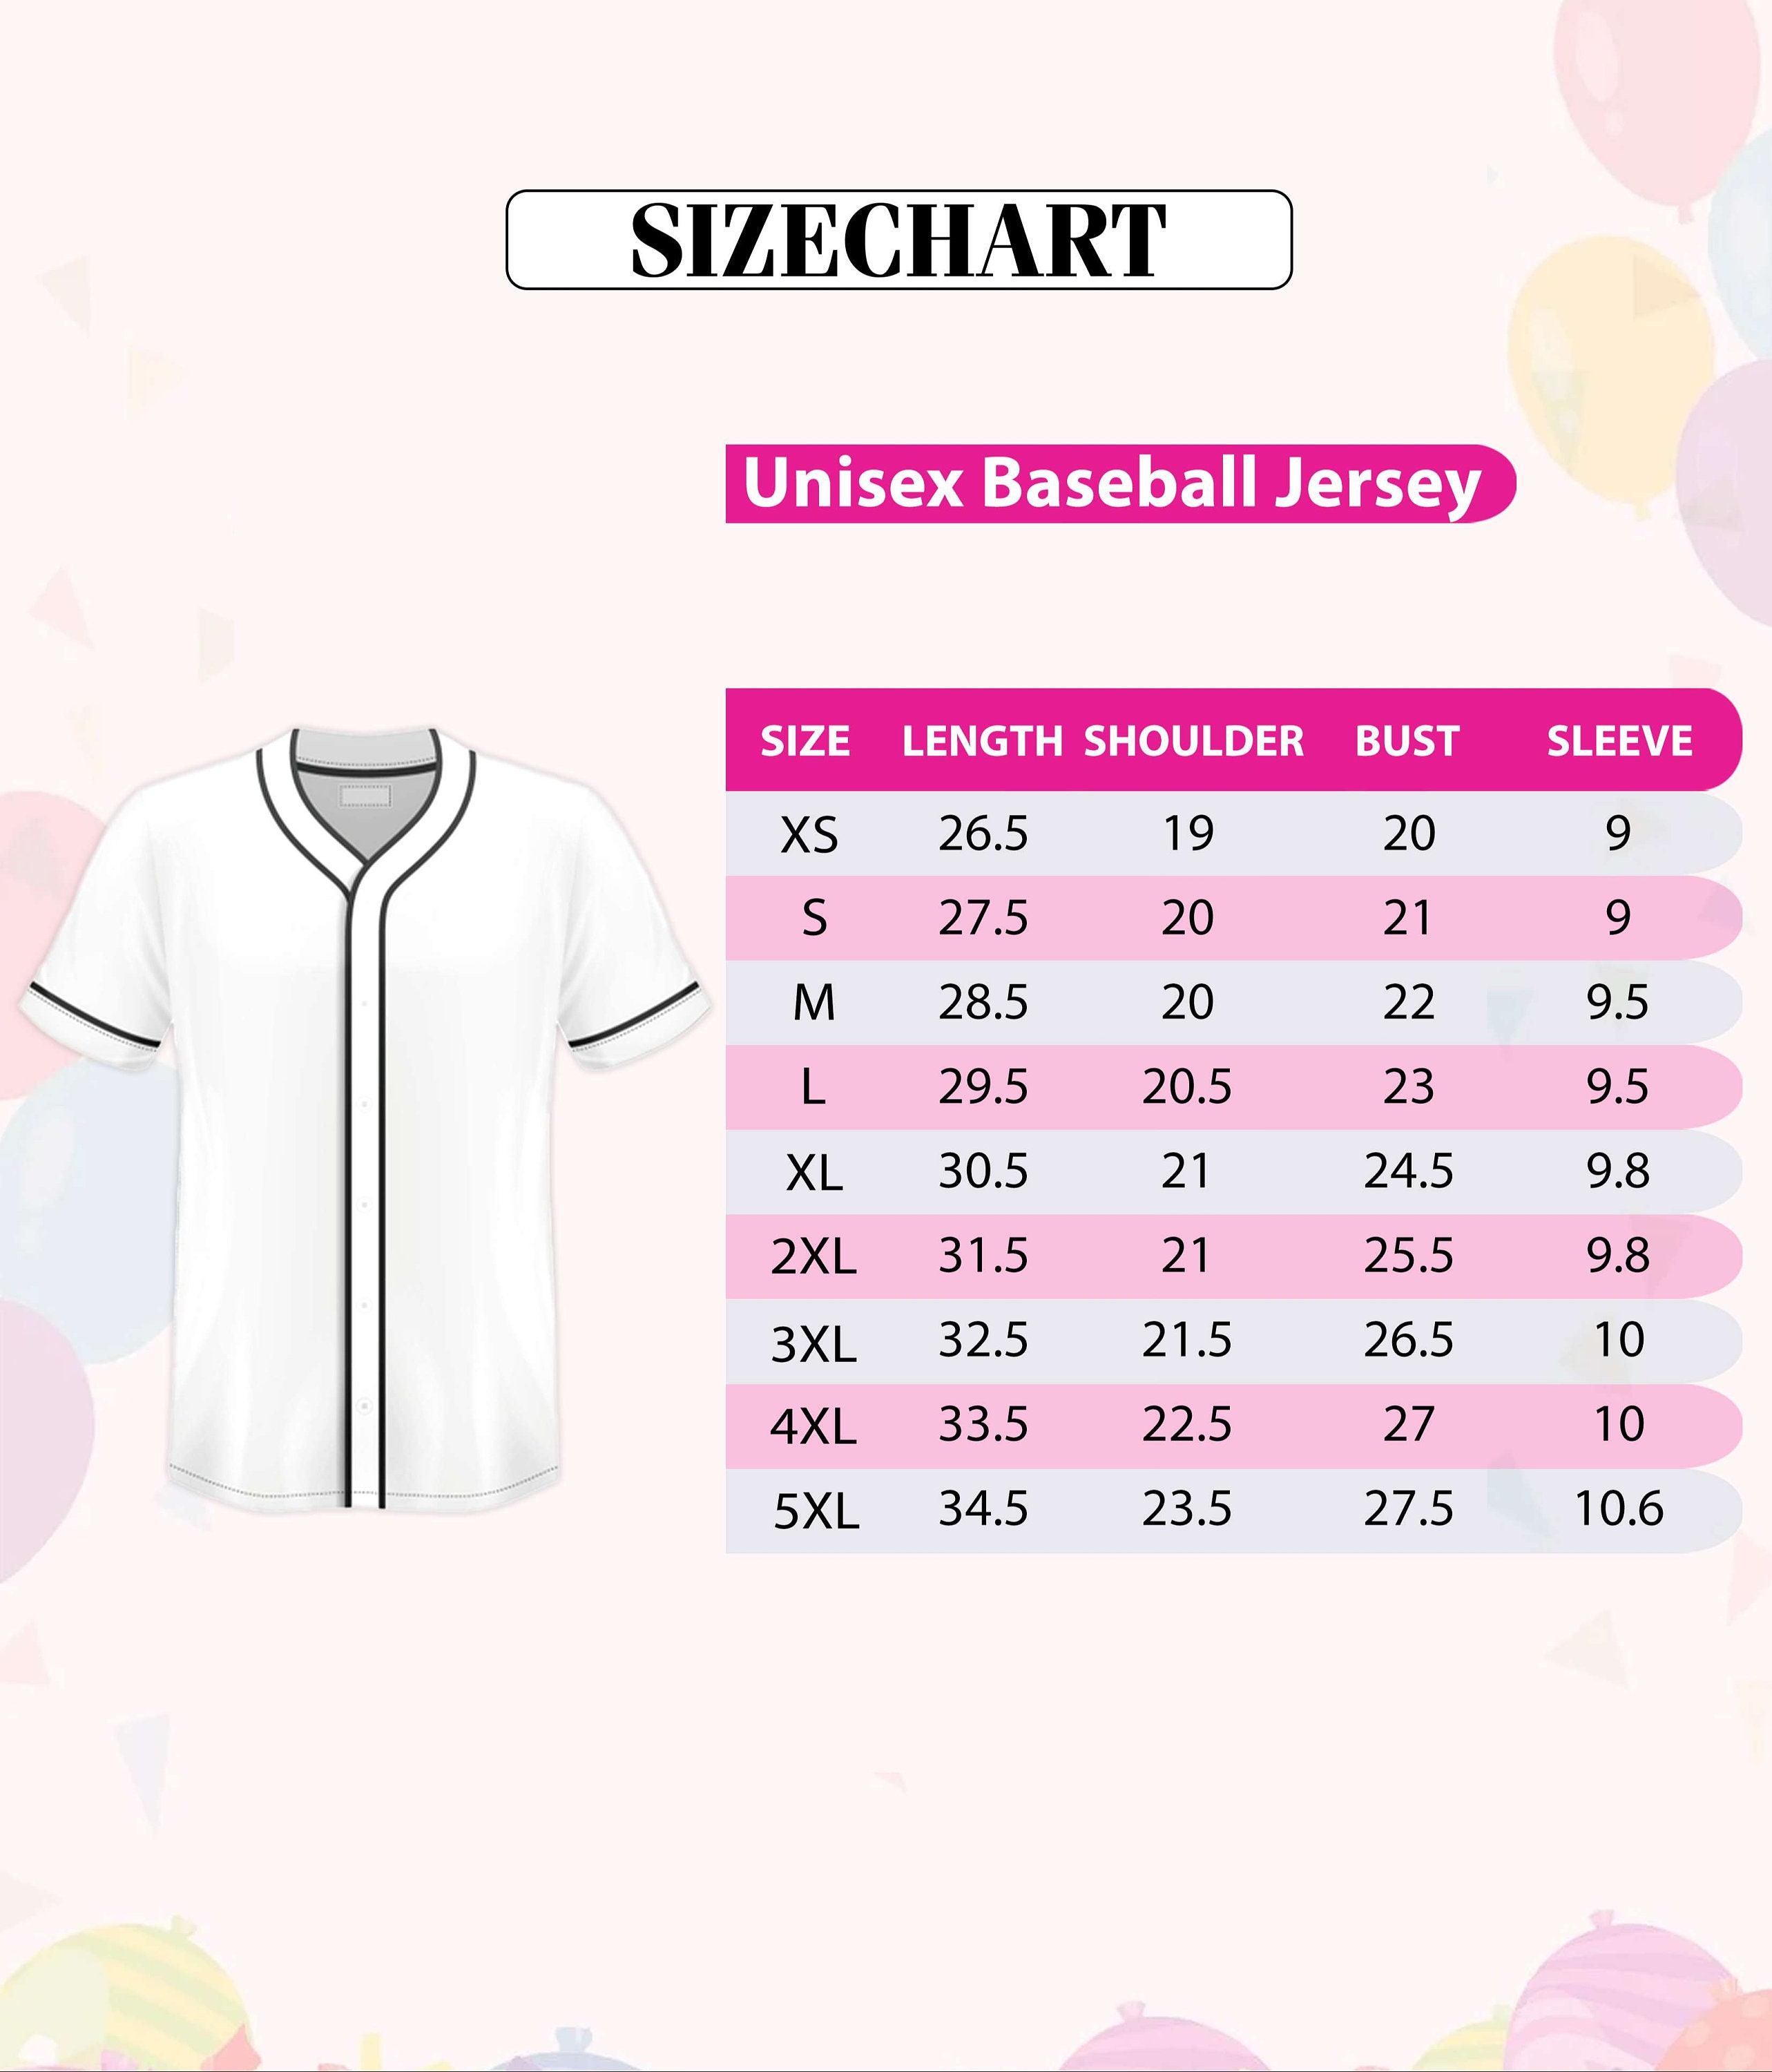 Personalized Duck Baseball Jersey Shirt, Cartoon Custom 4th July Jersey